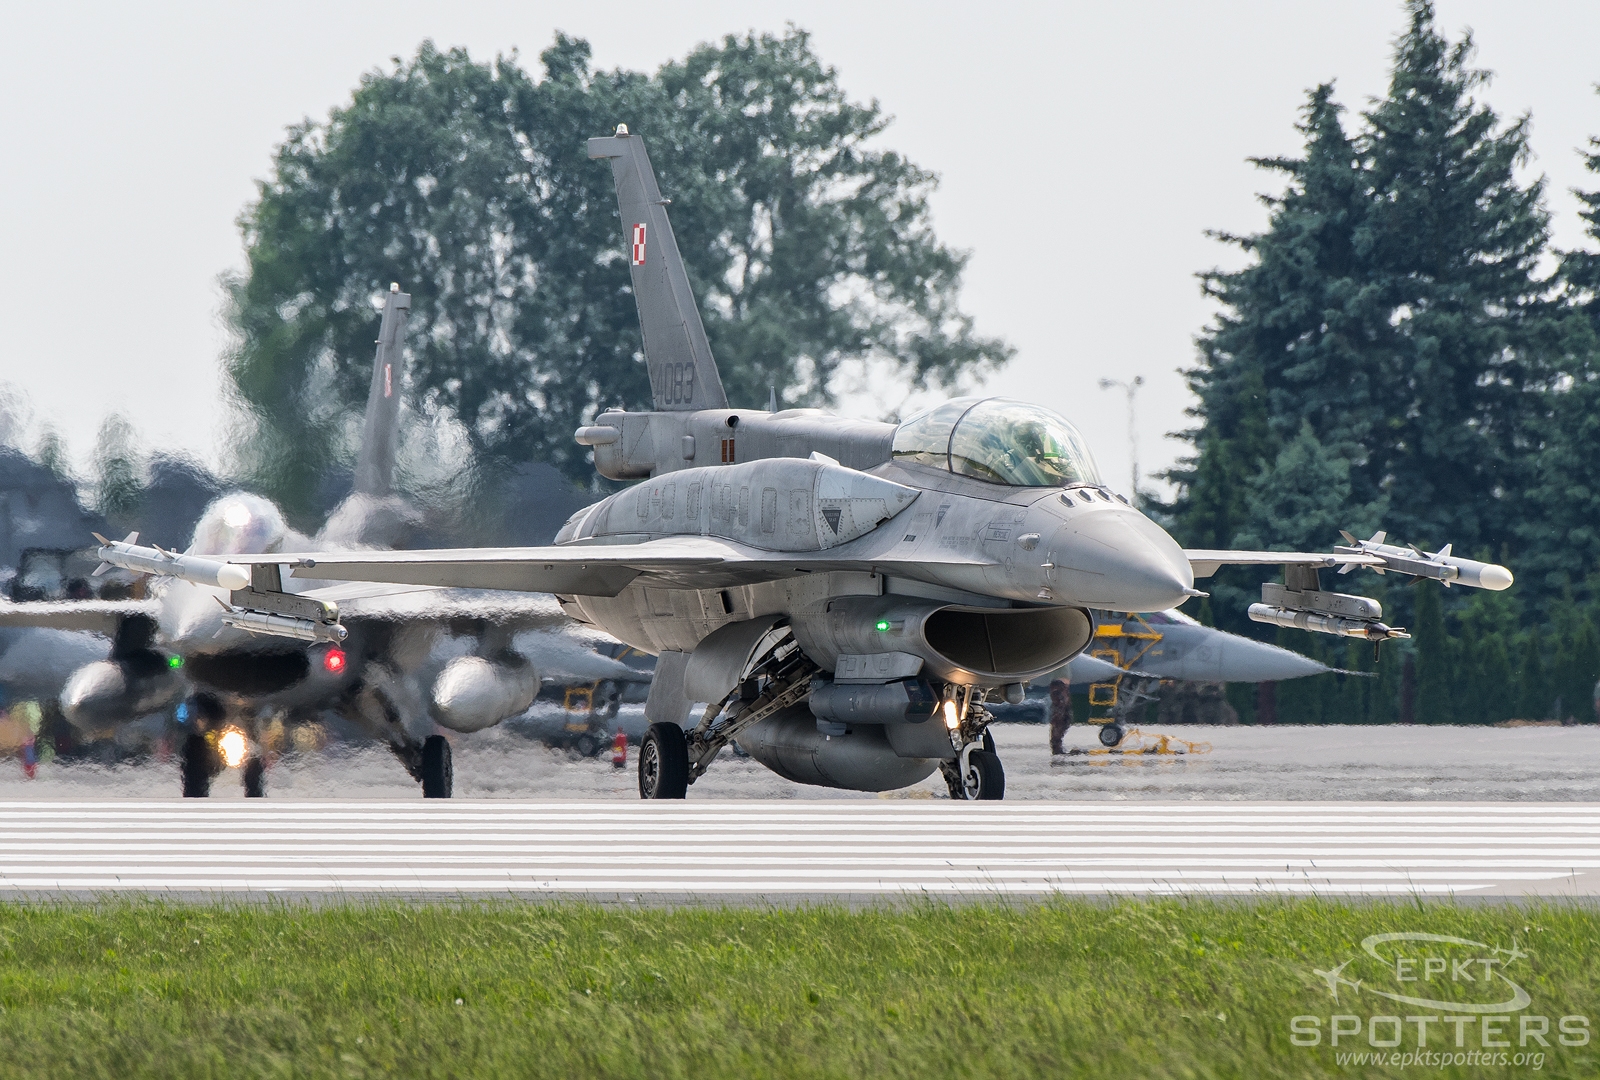 4083 - Lockheed Martin F-16 D Fighting Falcon (Poland - Air Force) / Krzesiny - Poznan Poland [EPKS/]